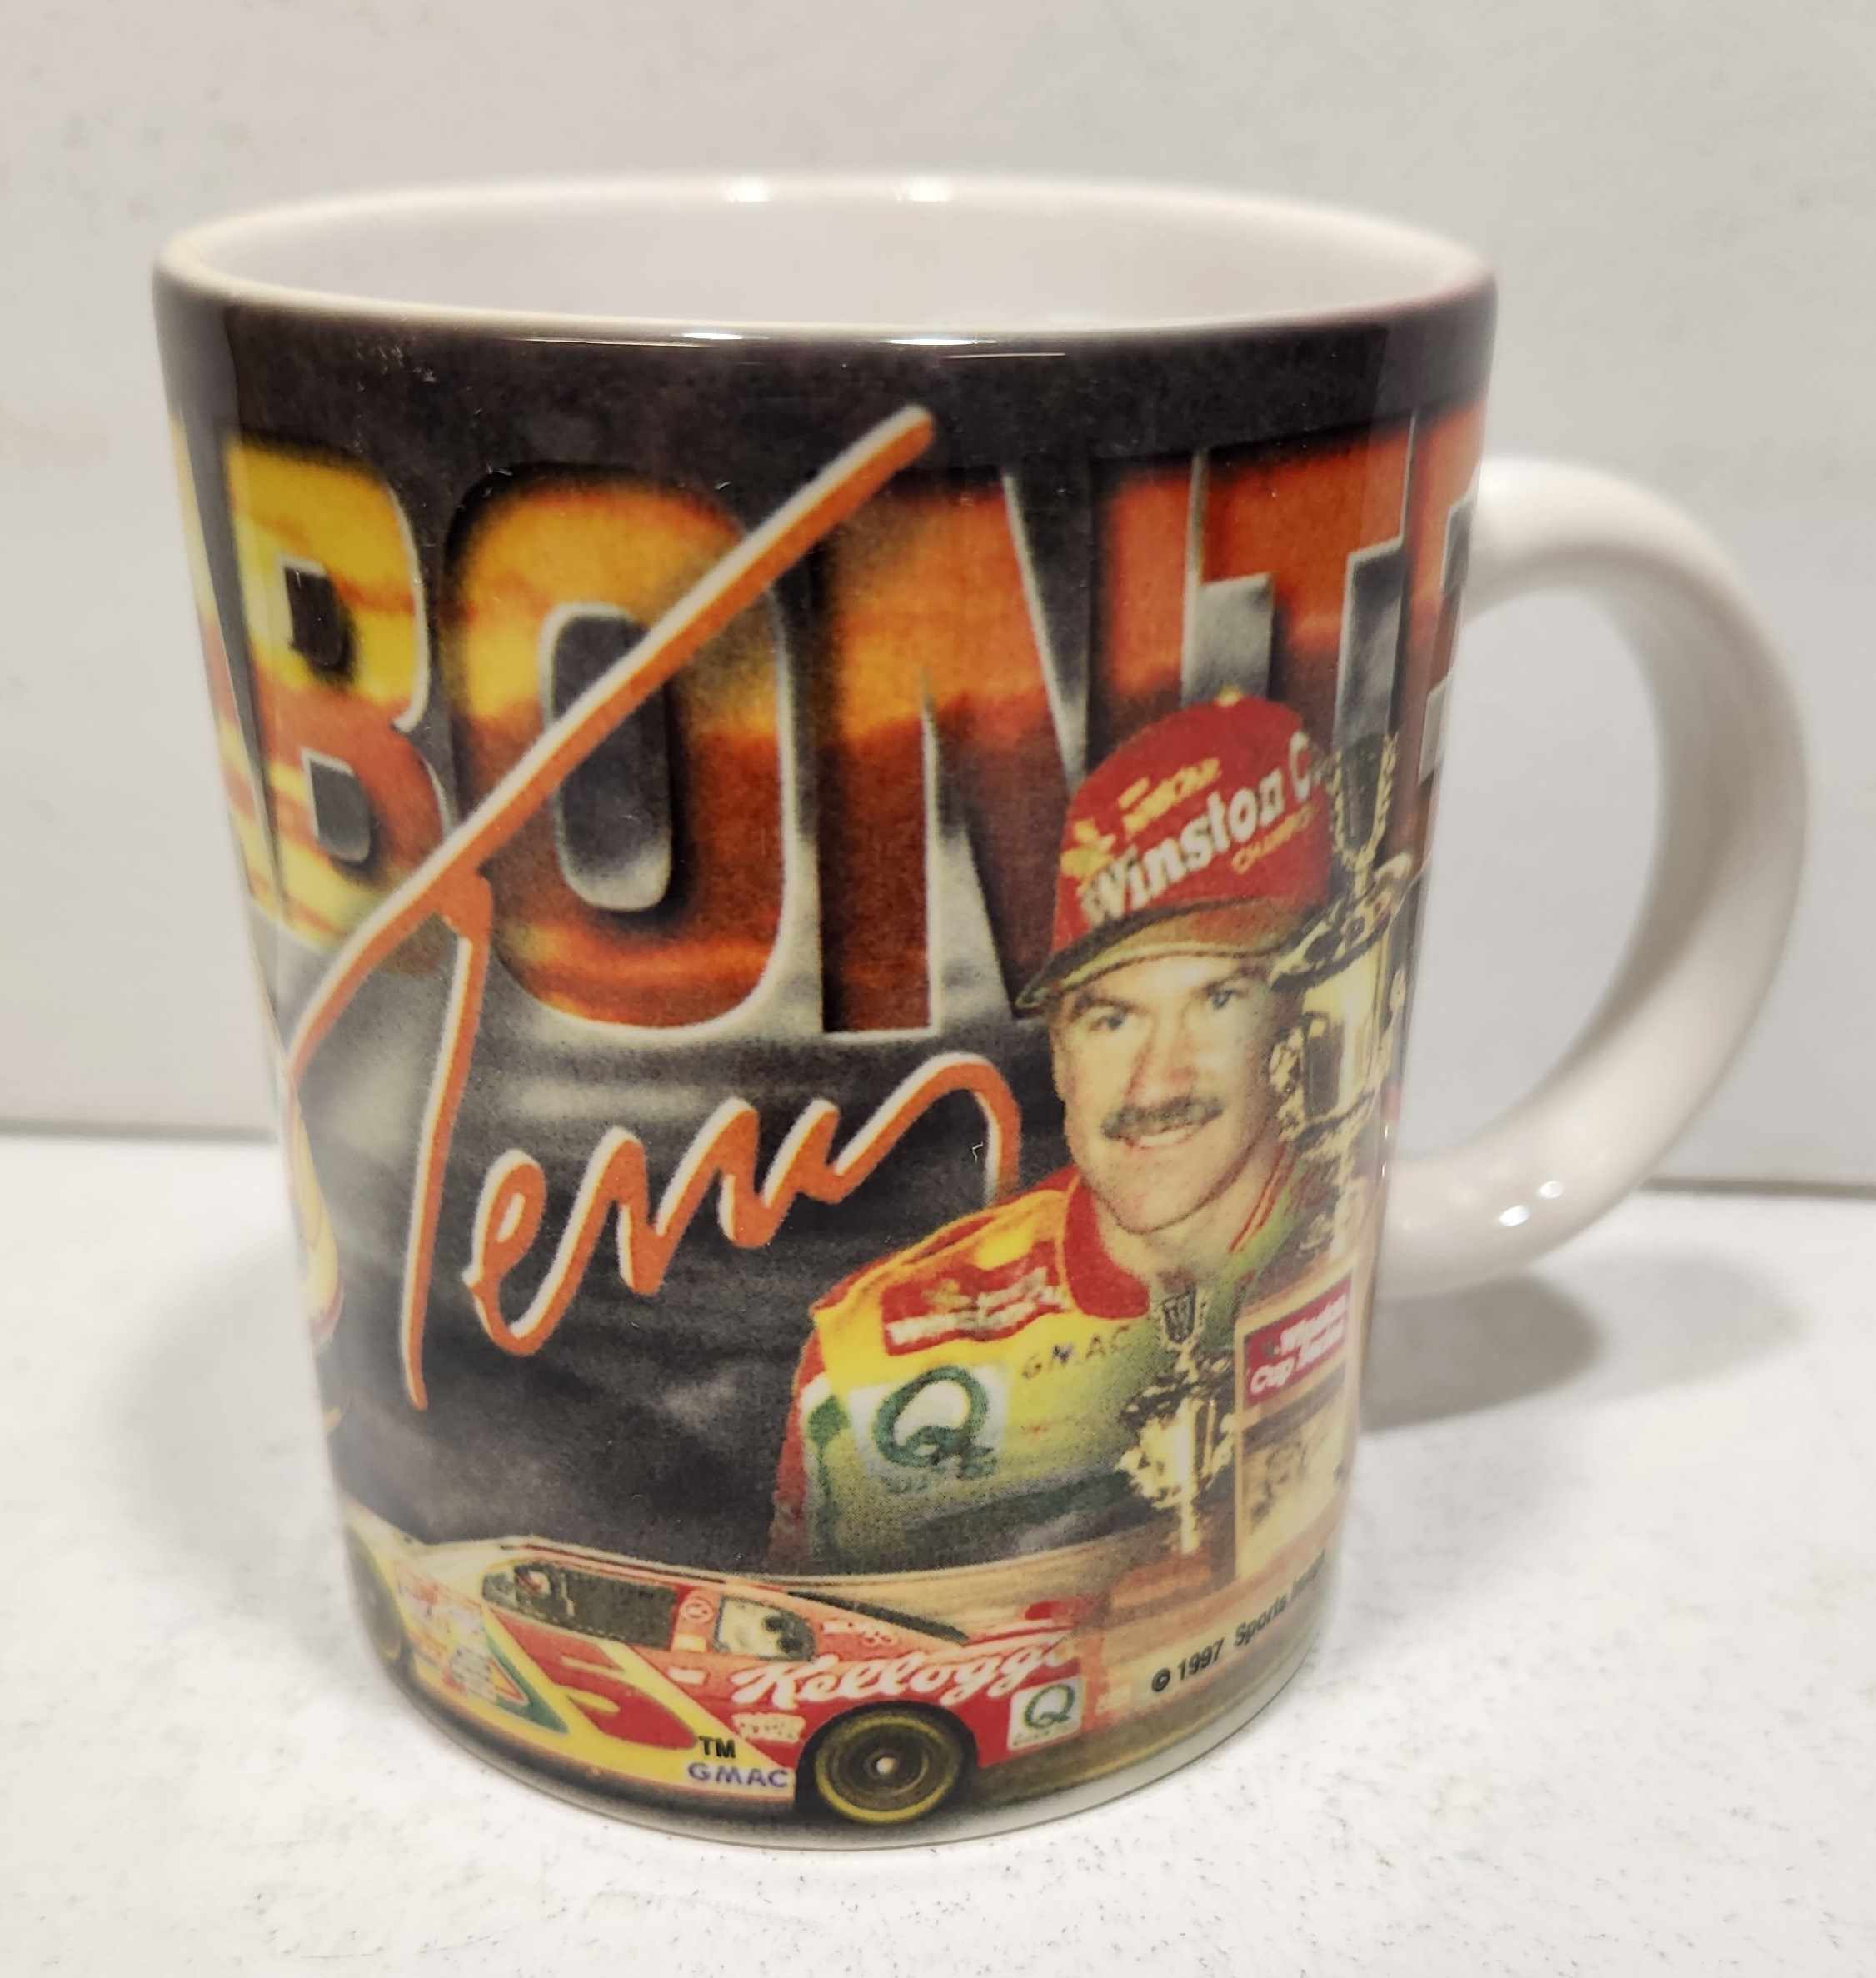 1996 Terry Labonte Kellogg's "Winston Cup Champion" collectors mug